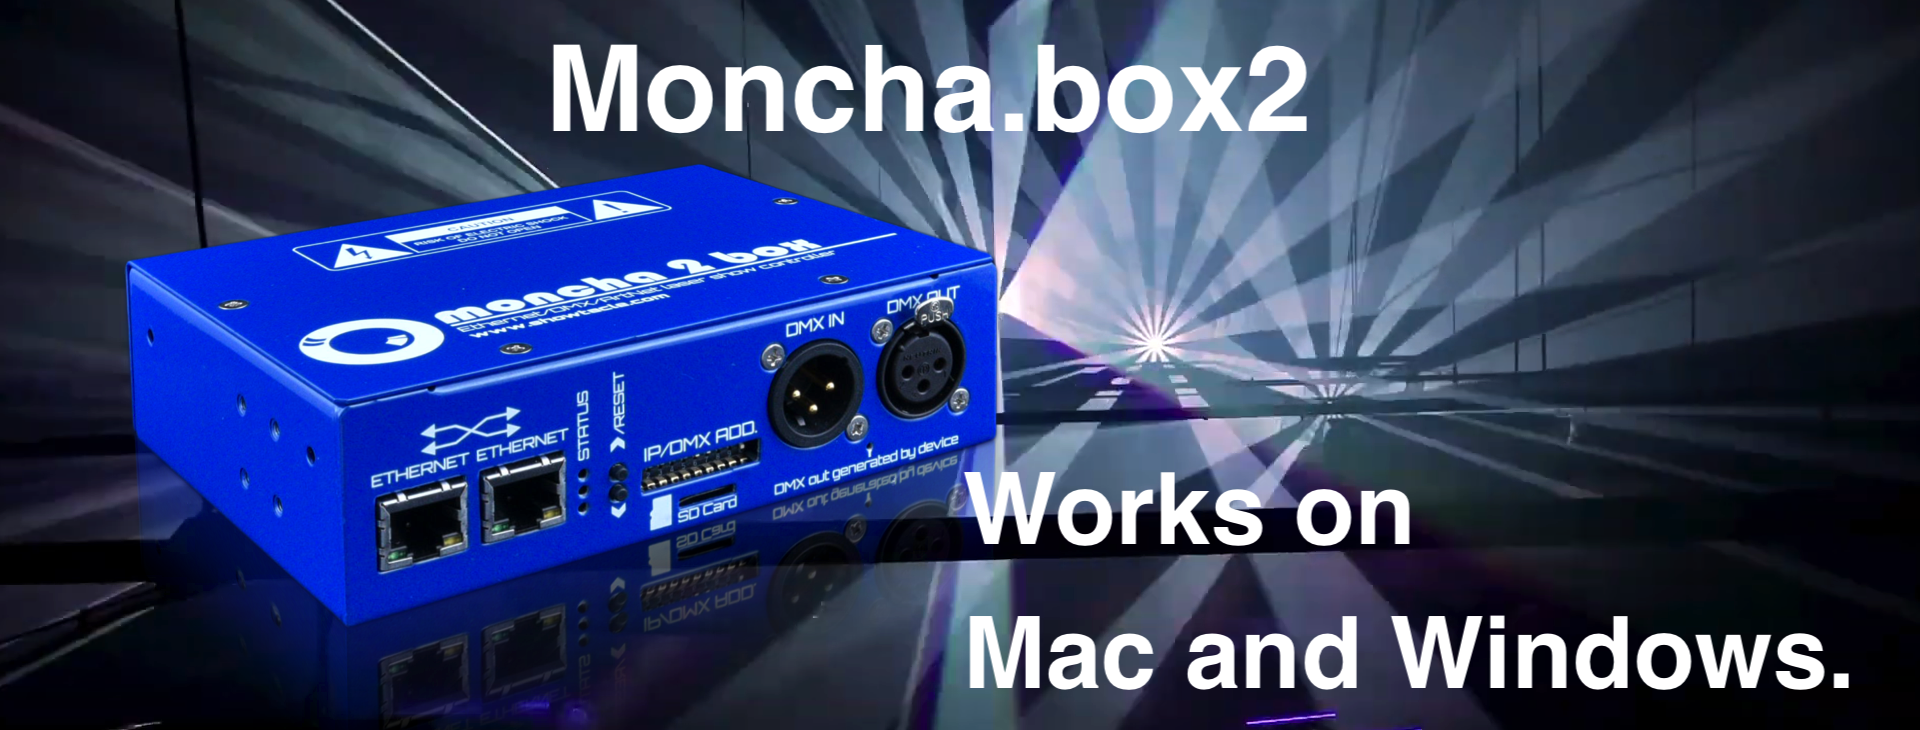 moncha.box2